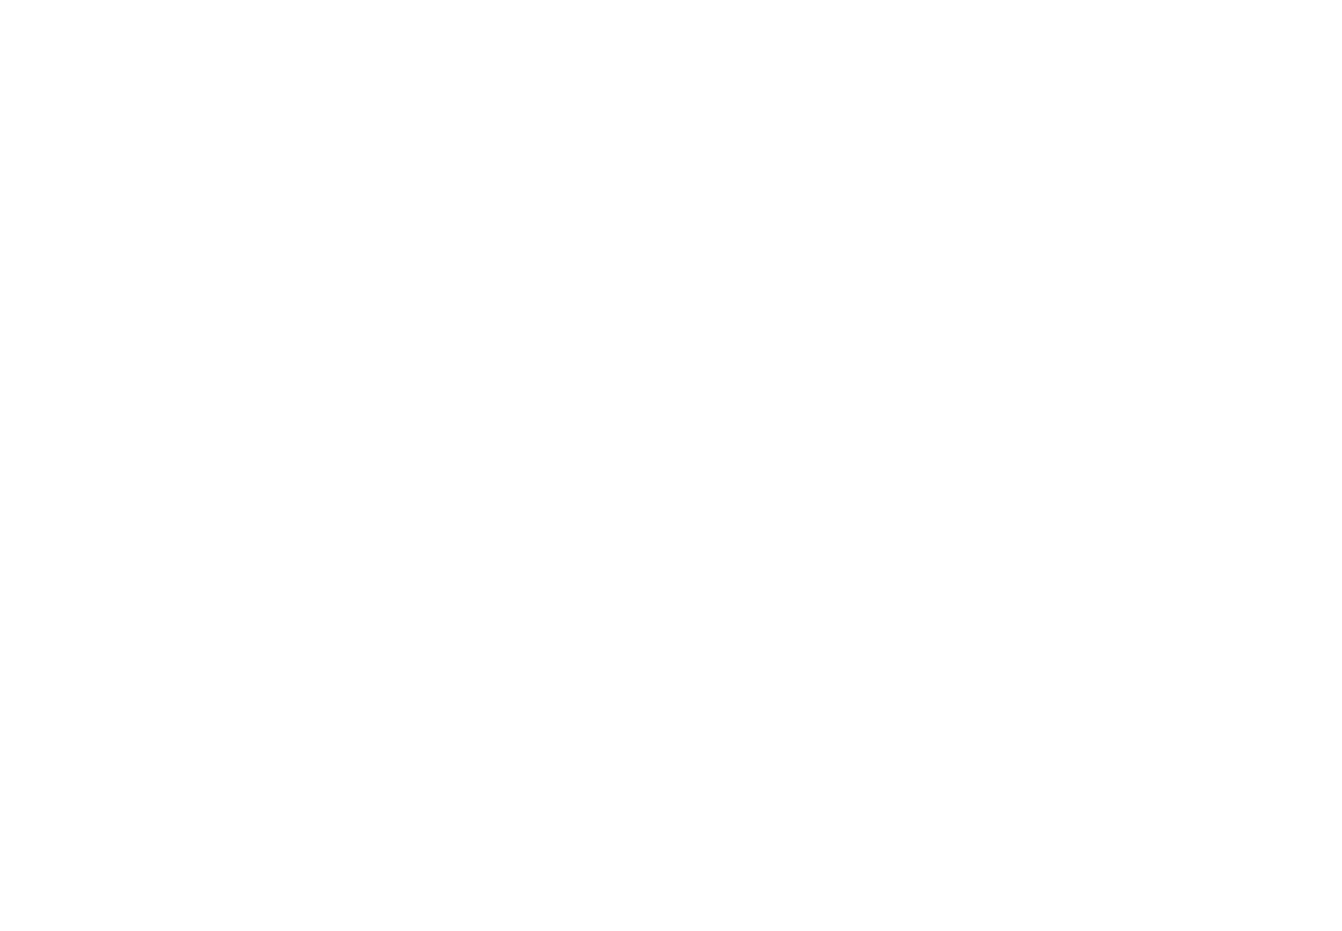 Commerce FDIC bank logo 